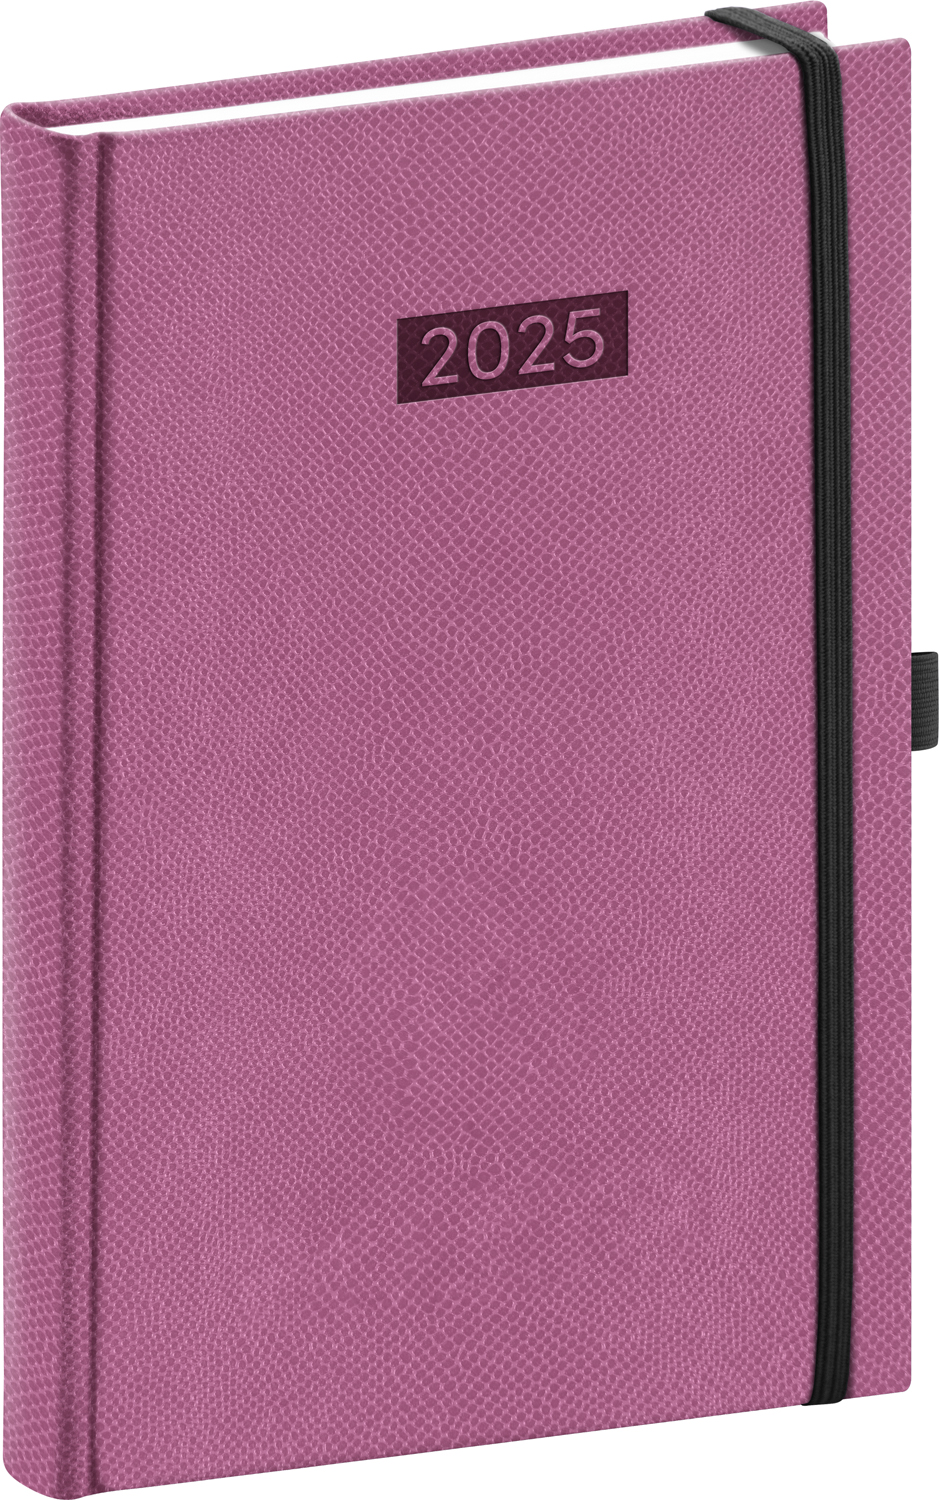 Denní diář Diario 2025, A5 - růžová